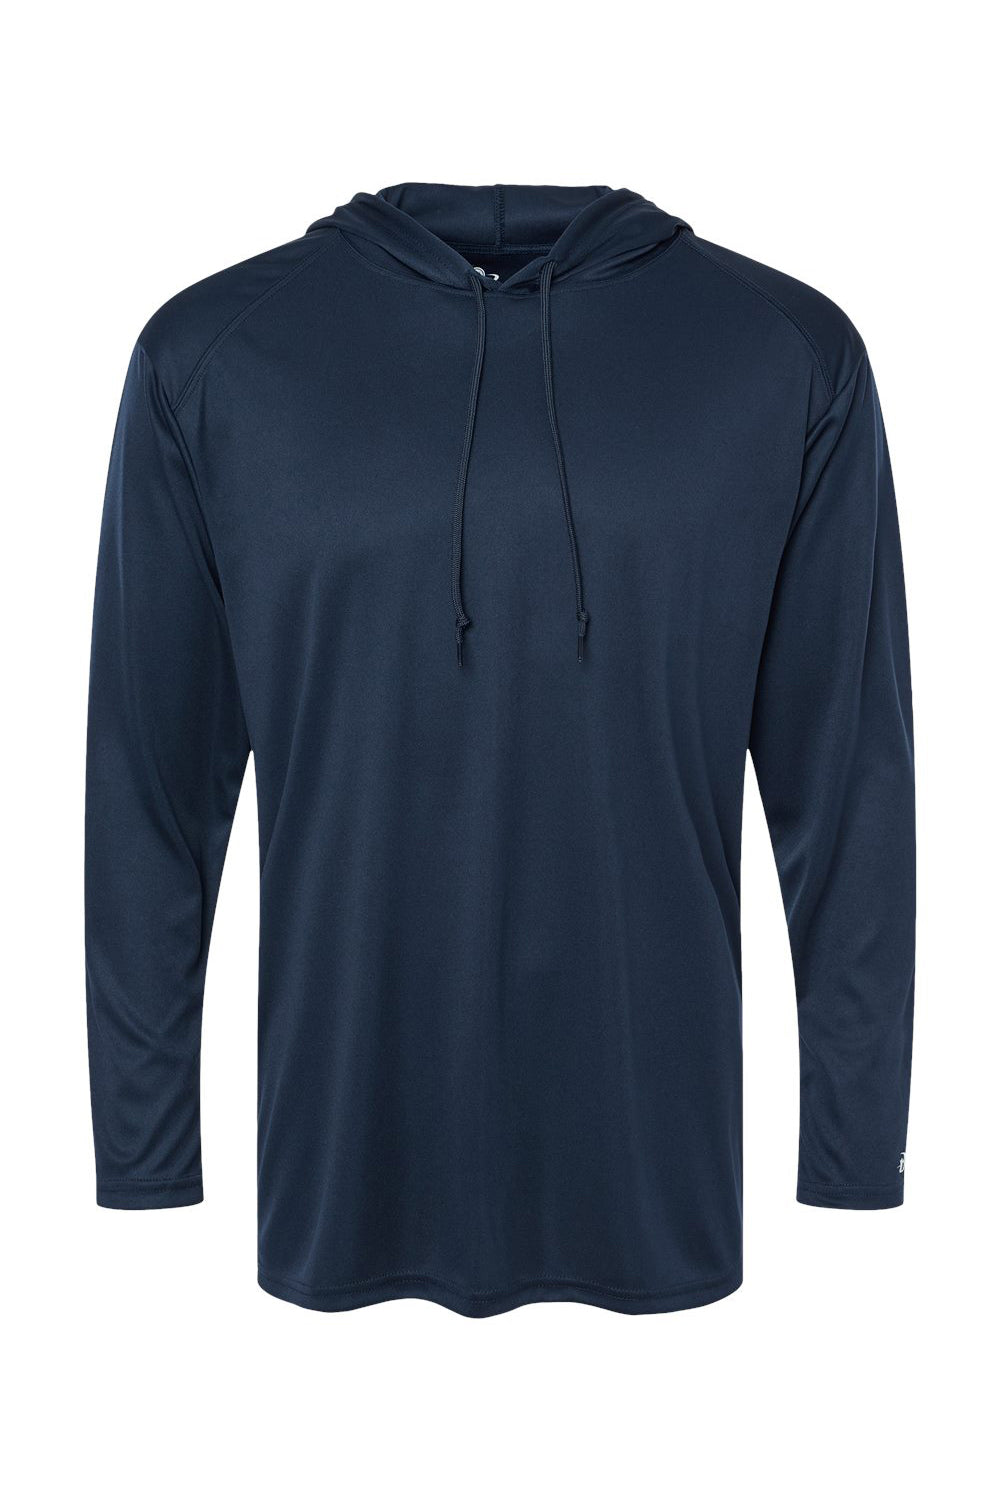 Badger 4105 Mens B-Core Moisture Wicking Long Sleeve Hooded T-Shirt Hoodie Navy Blue Flat Front